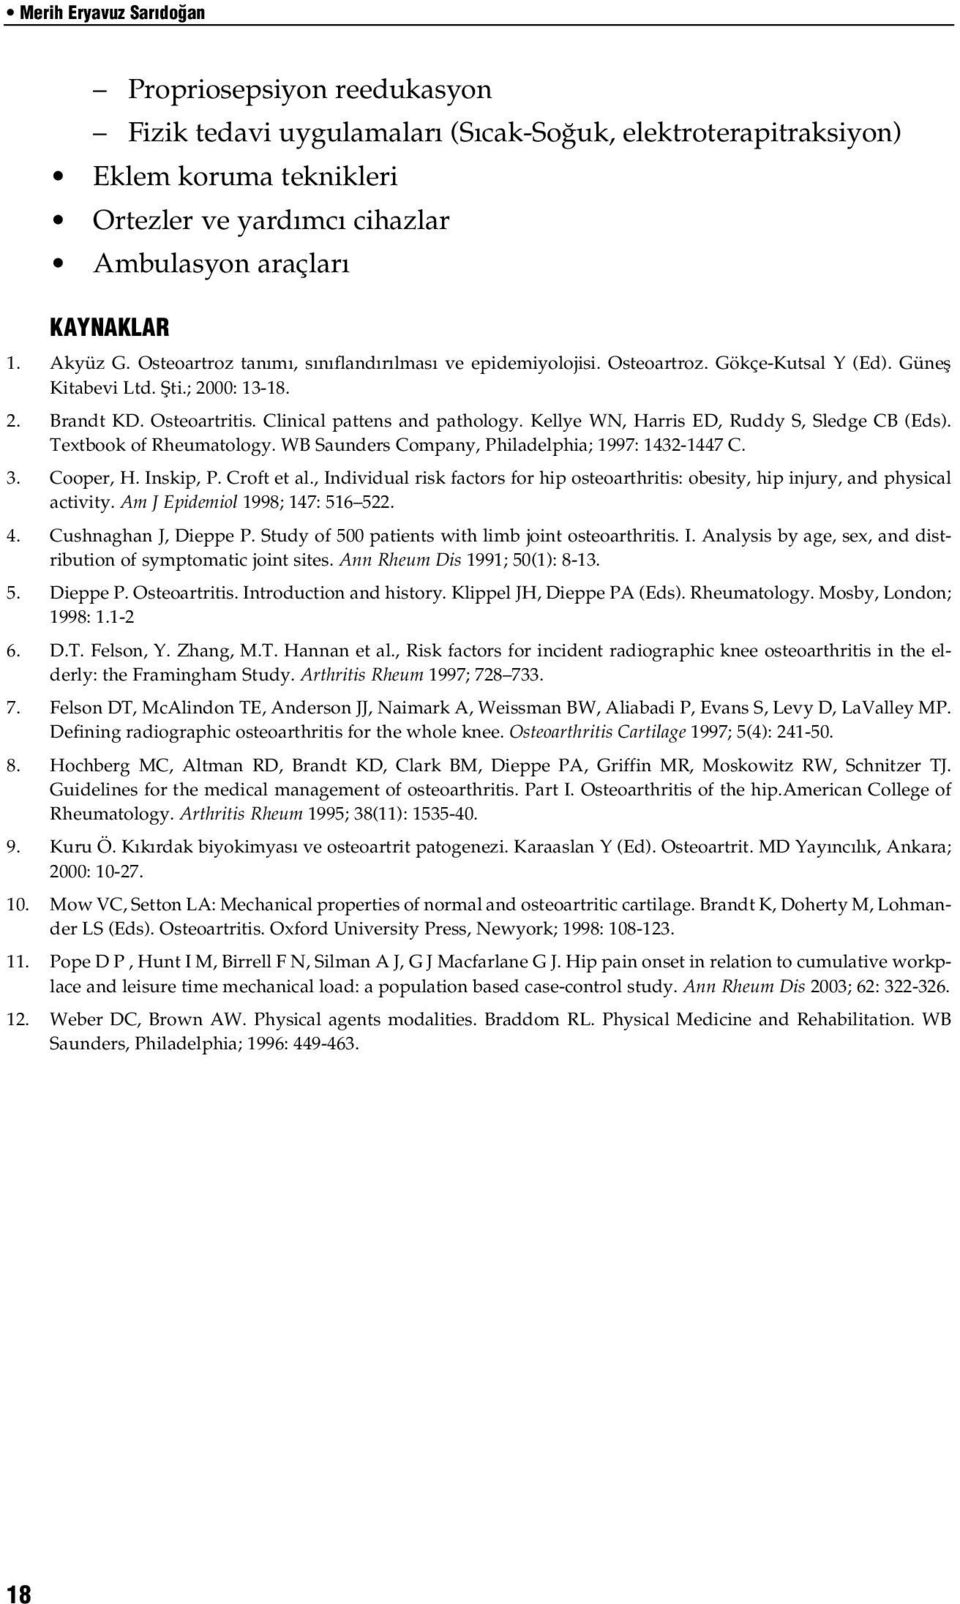 Clinical pattens and pathology. Kellye WN, Harris ED, Ruddy S, Sledge CB (Eds). Textbook of Rheumatology. WB Saunders Company, Philadelphia; 1997: 1432-1447 C. 3. Cooper, H. Inskip, P. Croft et al.